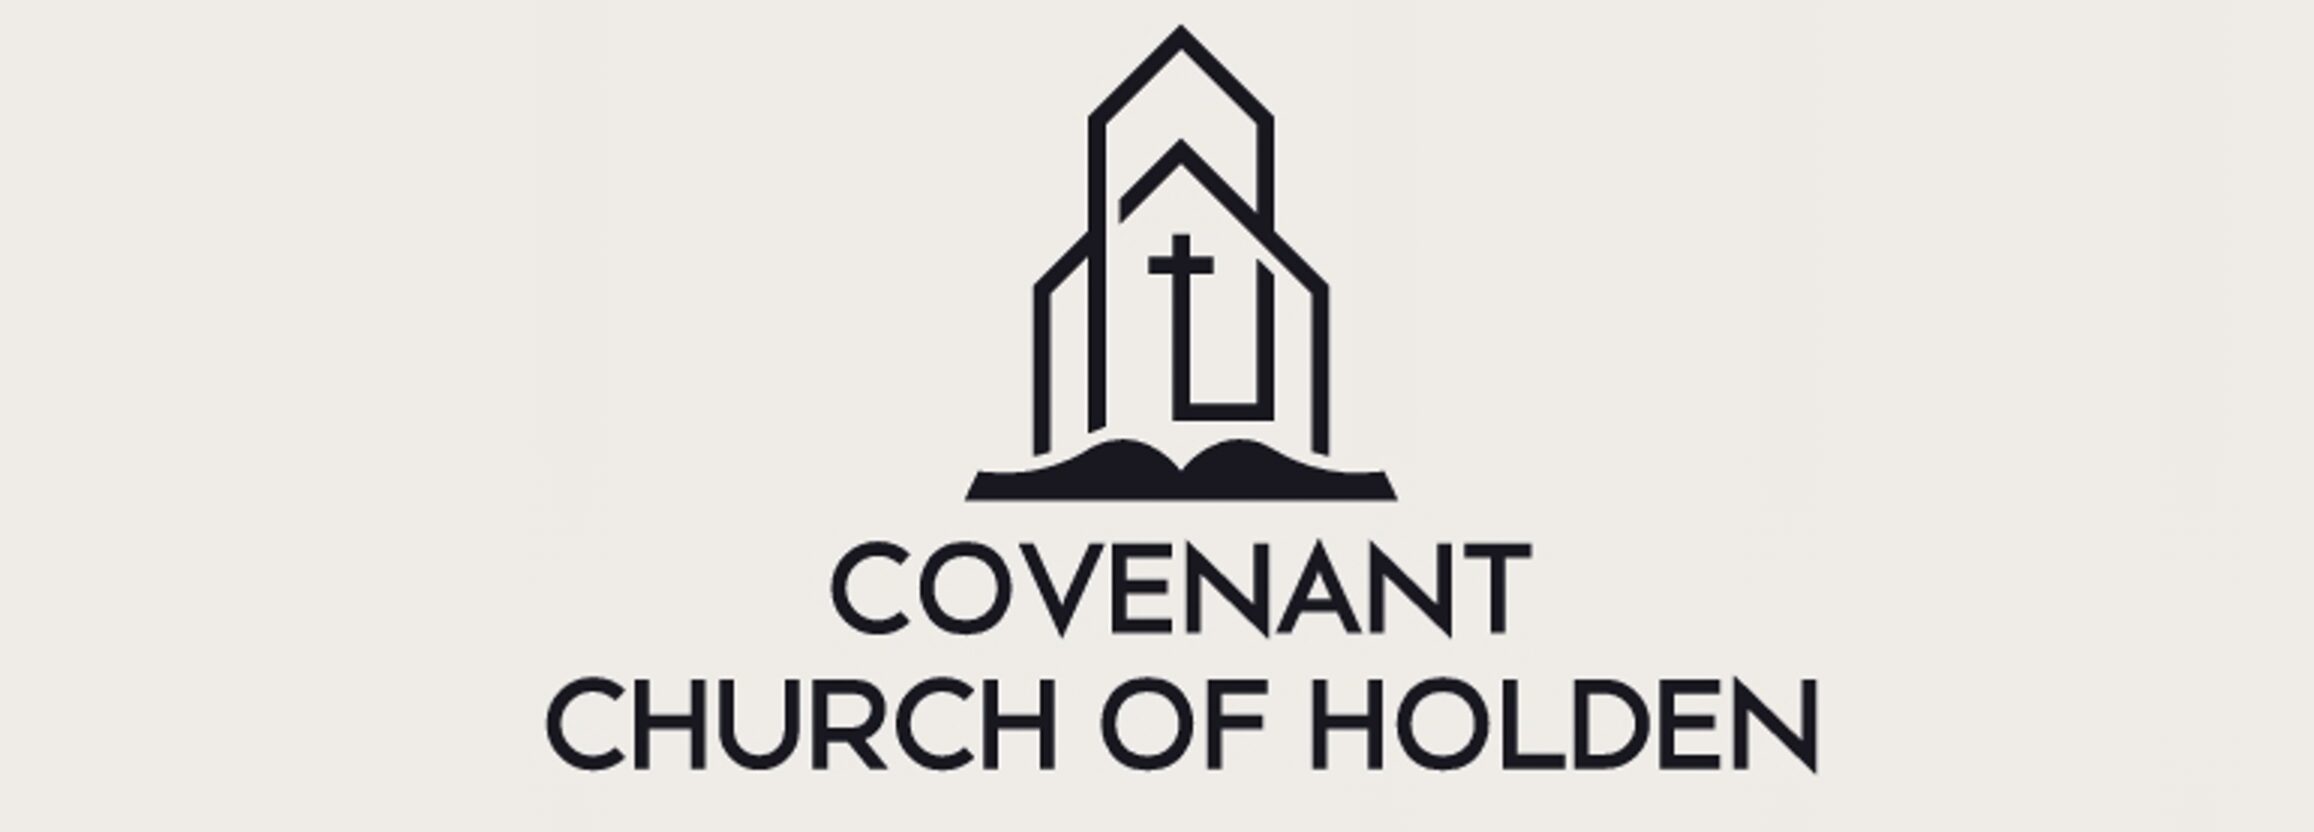 Covenant Church of Holden